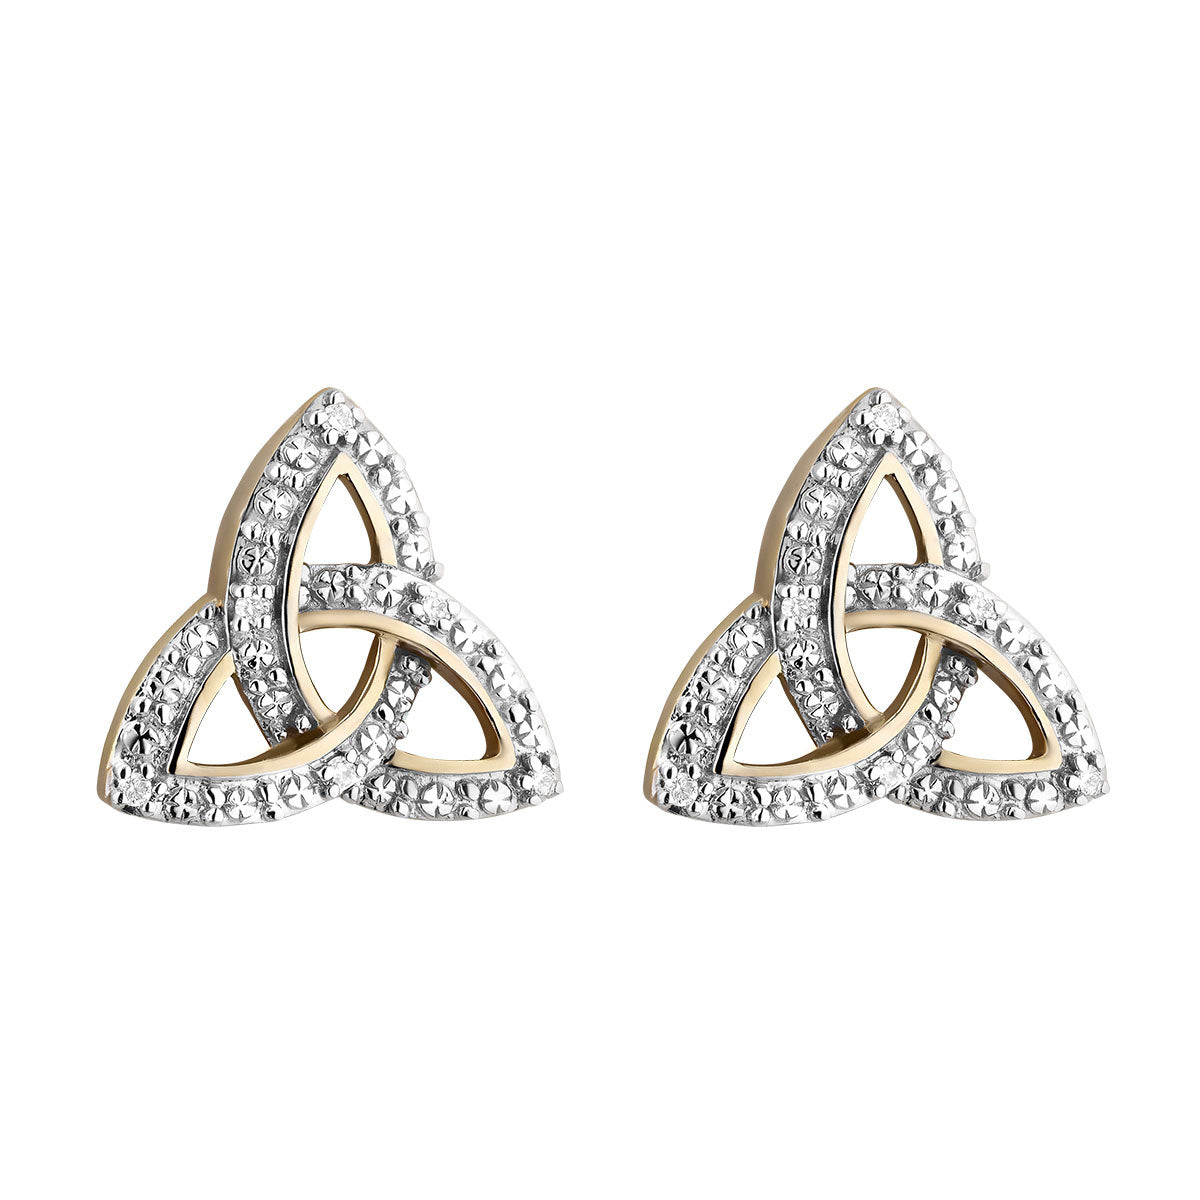 10k gold diamond set trinity knot stud earrings s33983 from Solvar